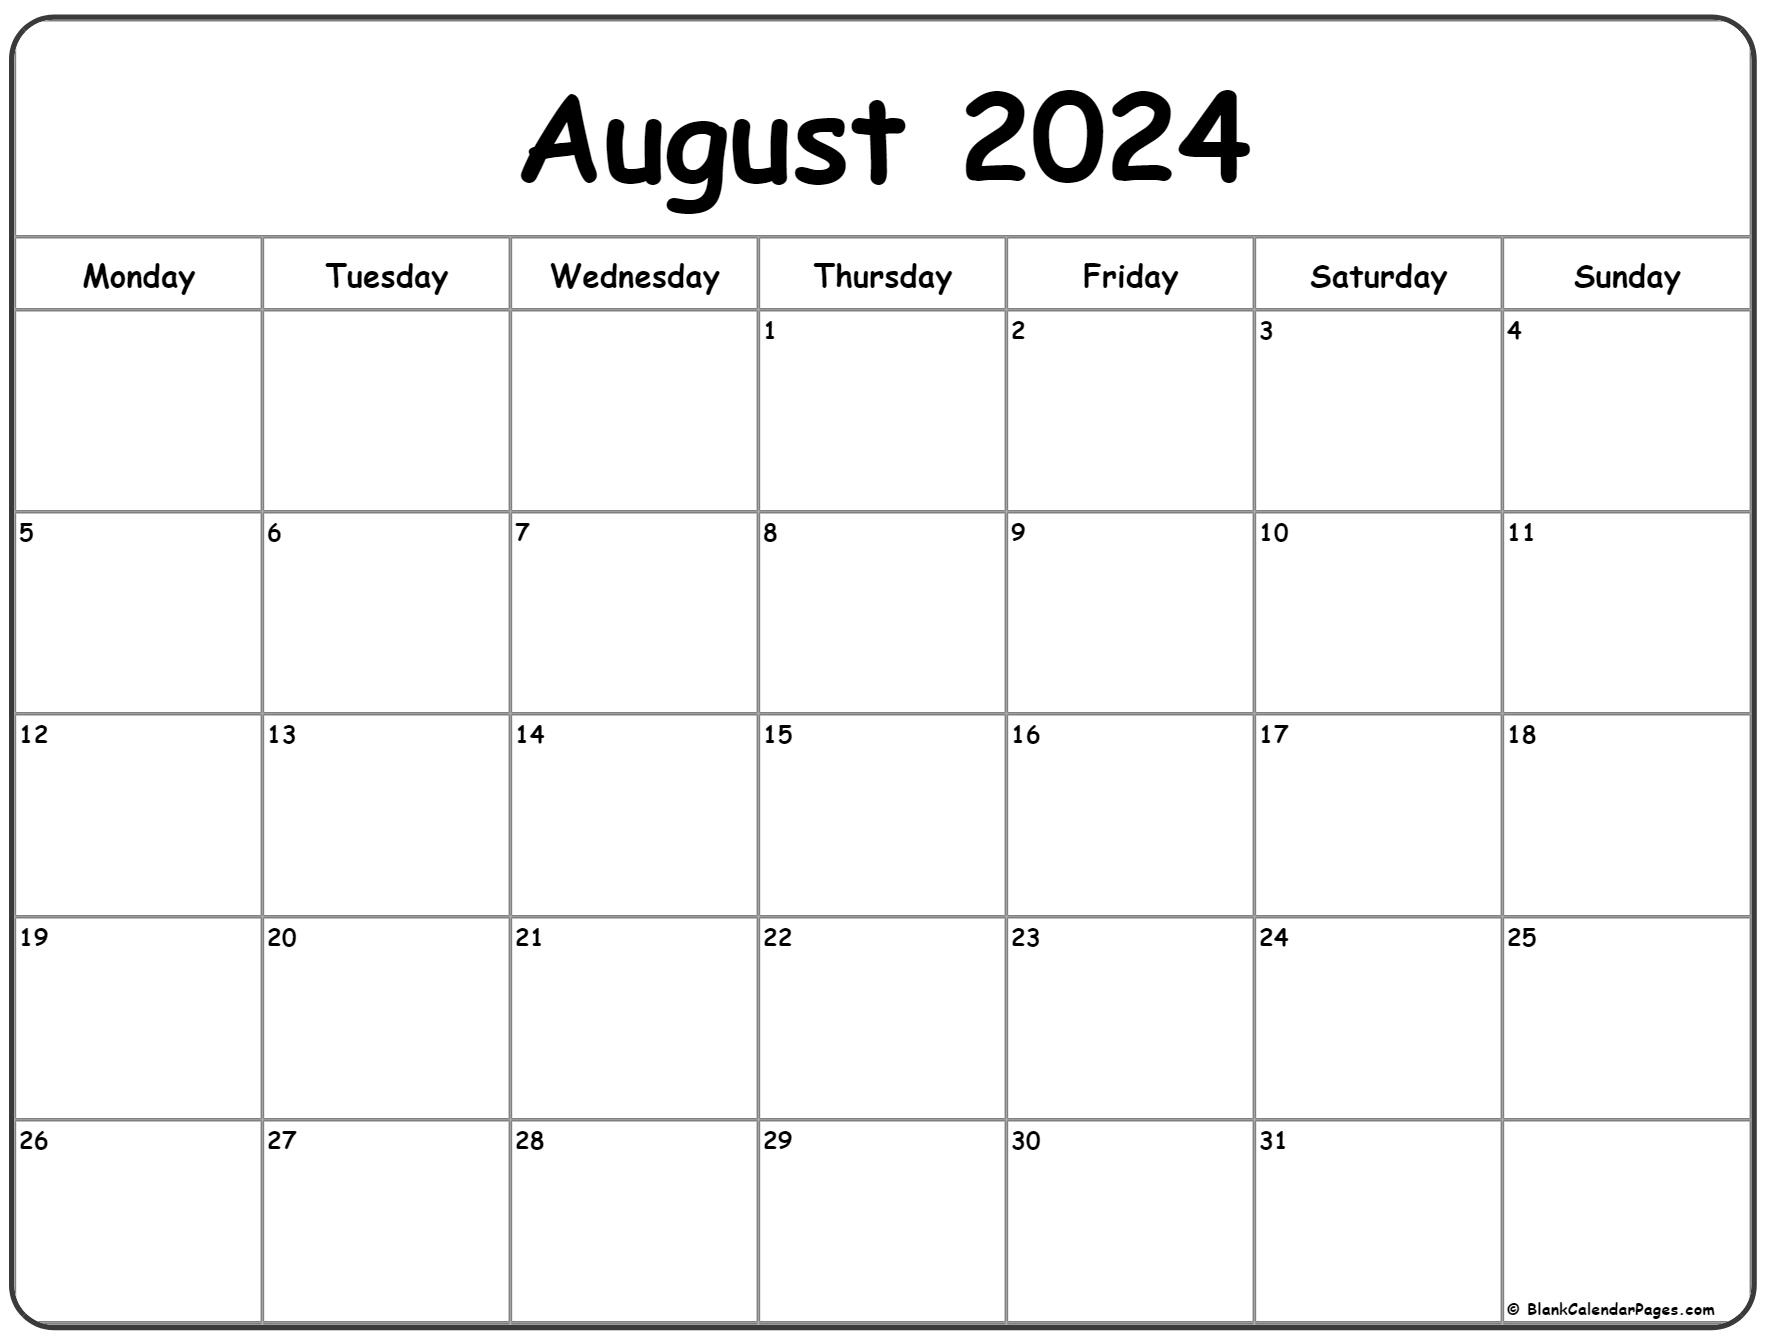 August 2024 Monday Calendar | Monday To Sunday | Printable Calendar 2024 August